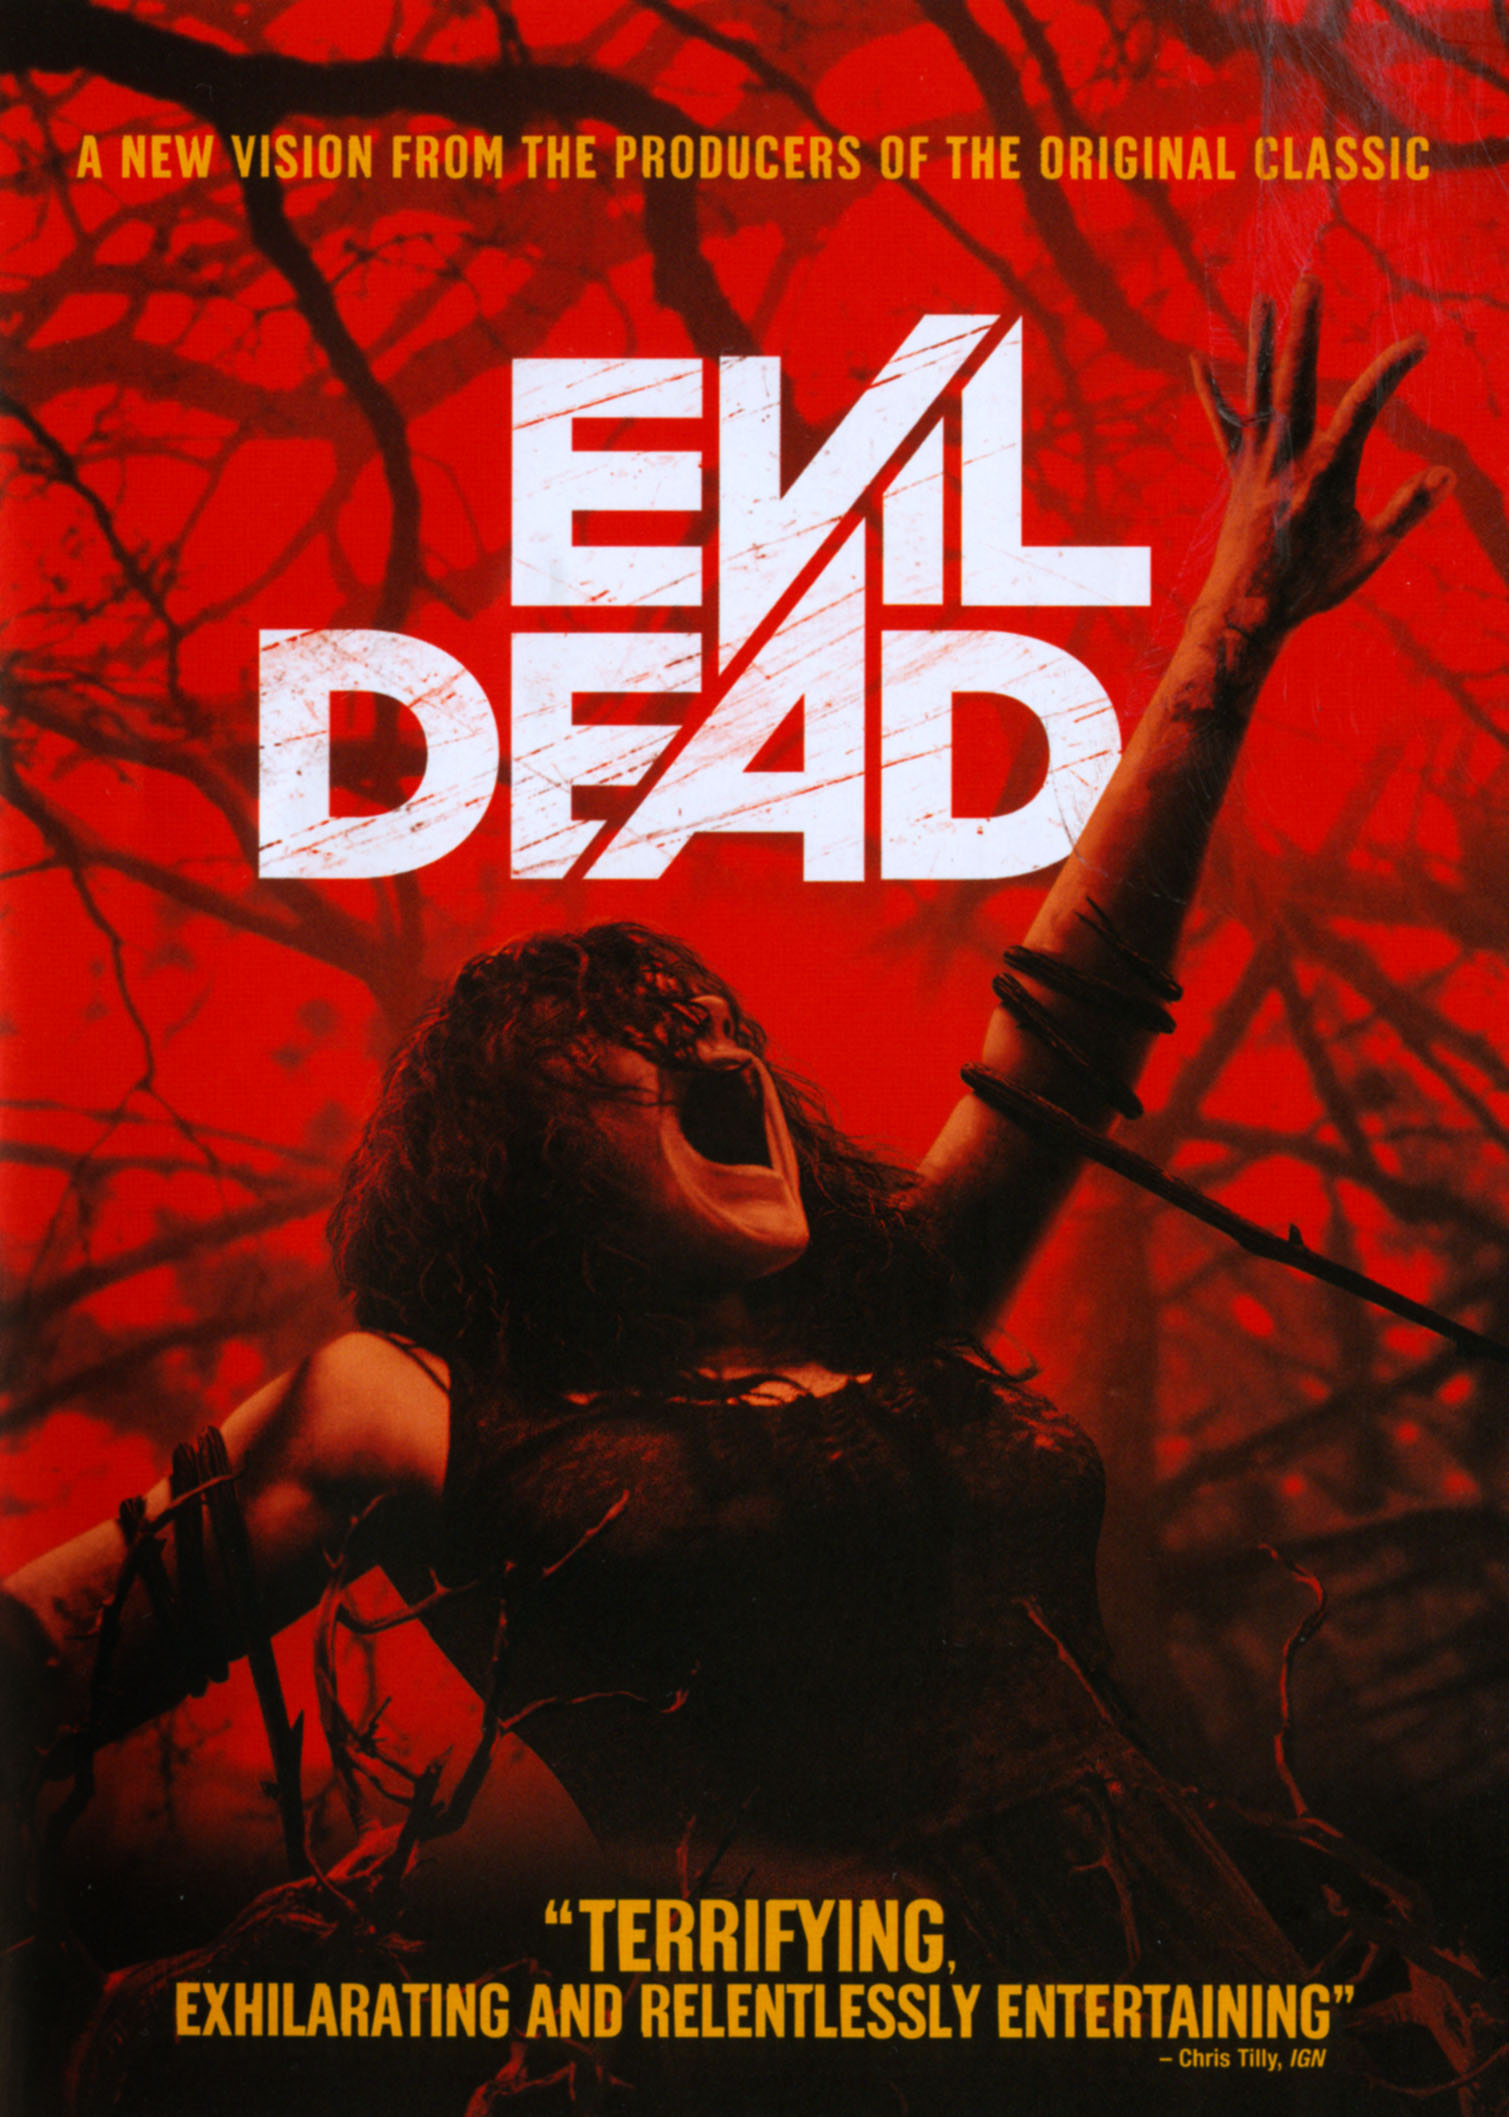 Evil Dead Rise Review - IGN